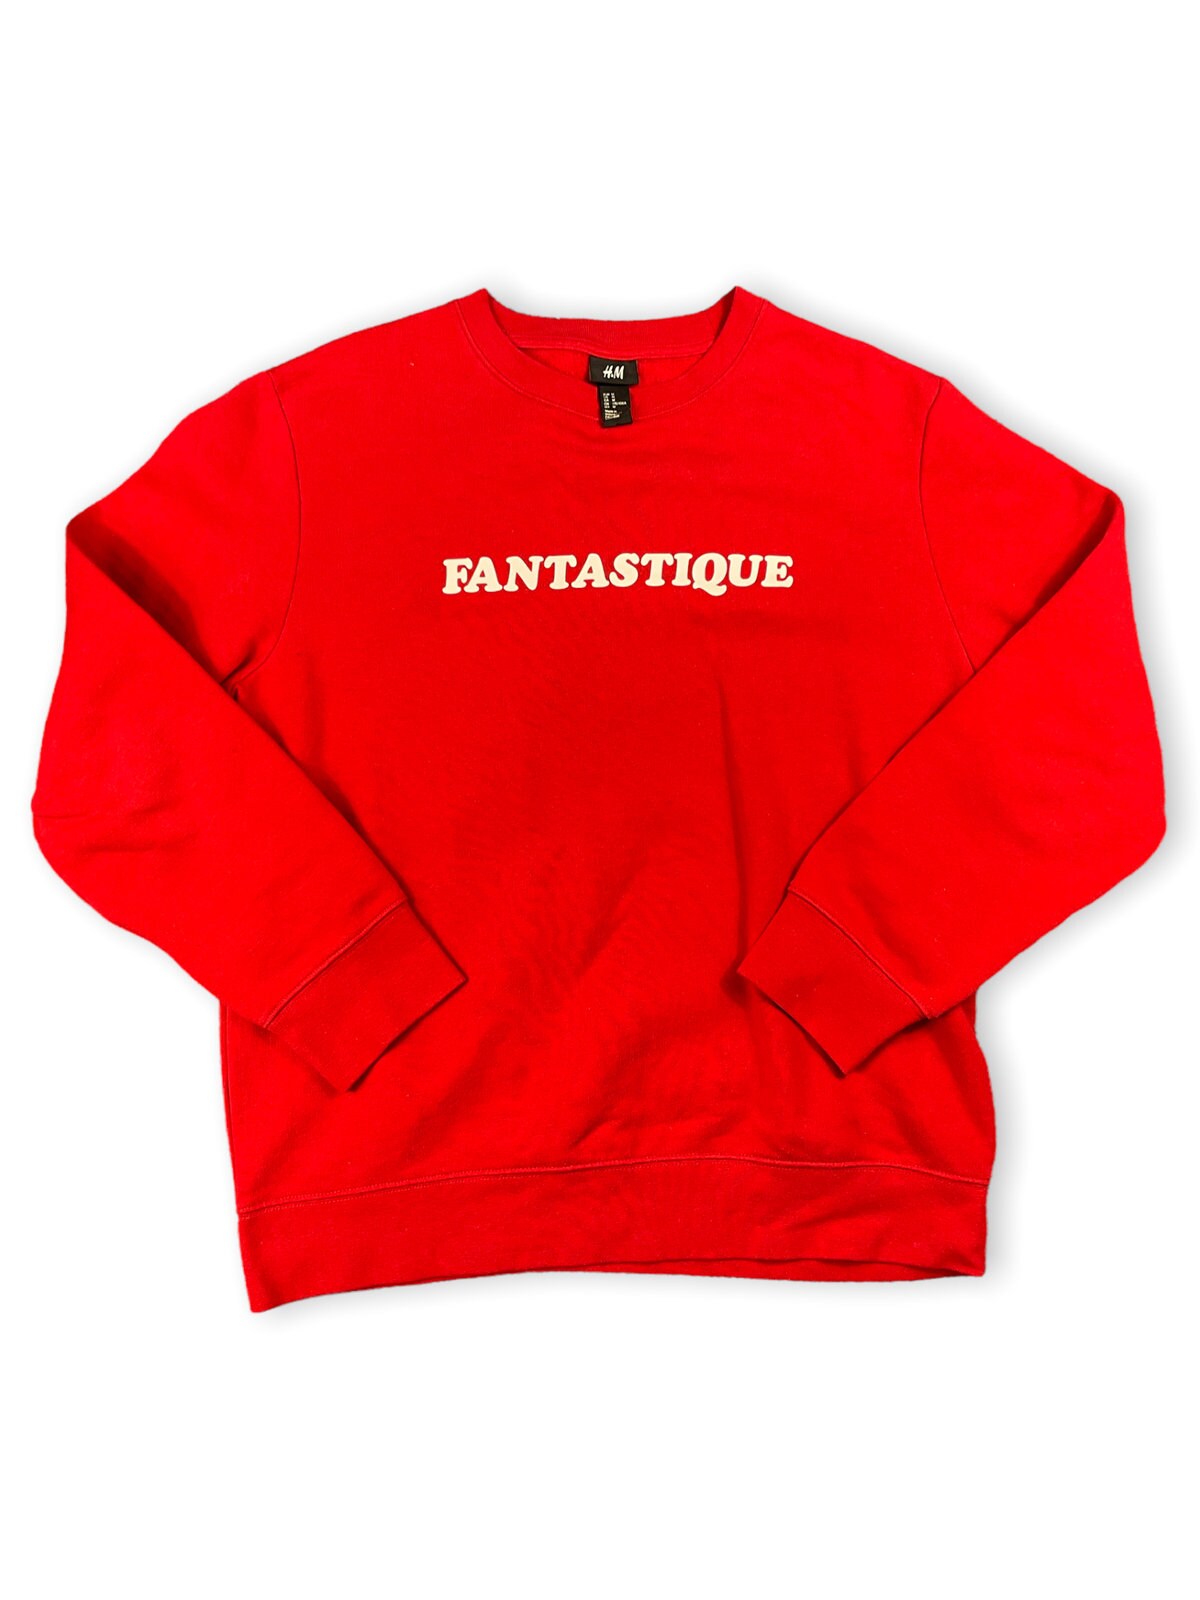 H&M Fantastique Red Sweater Medium - Etsy